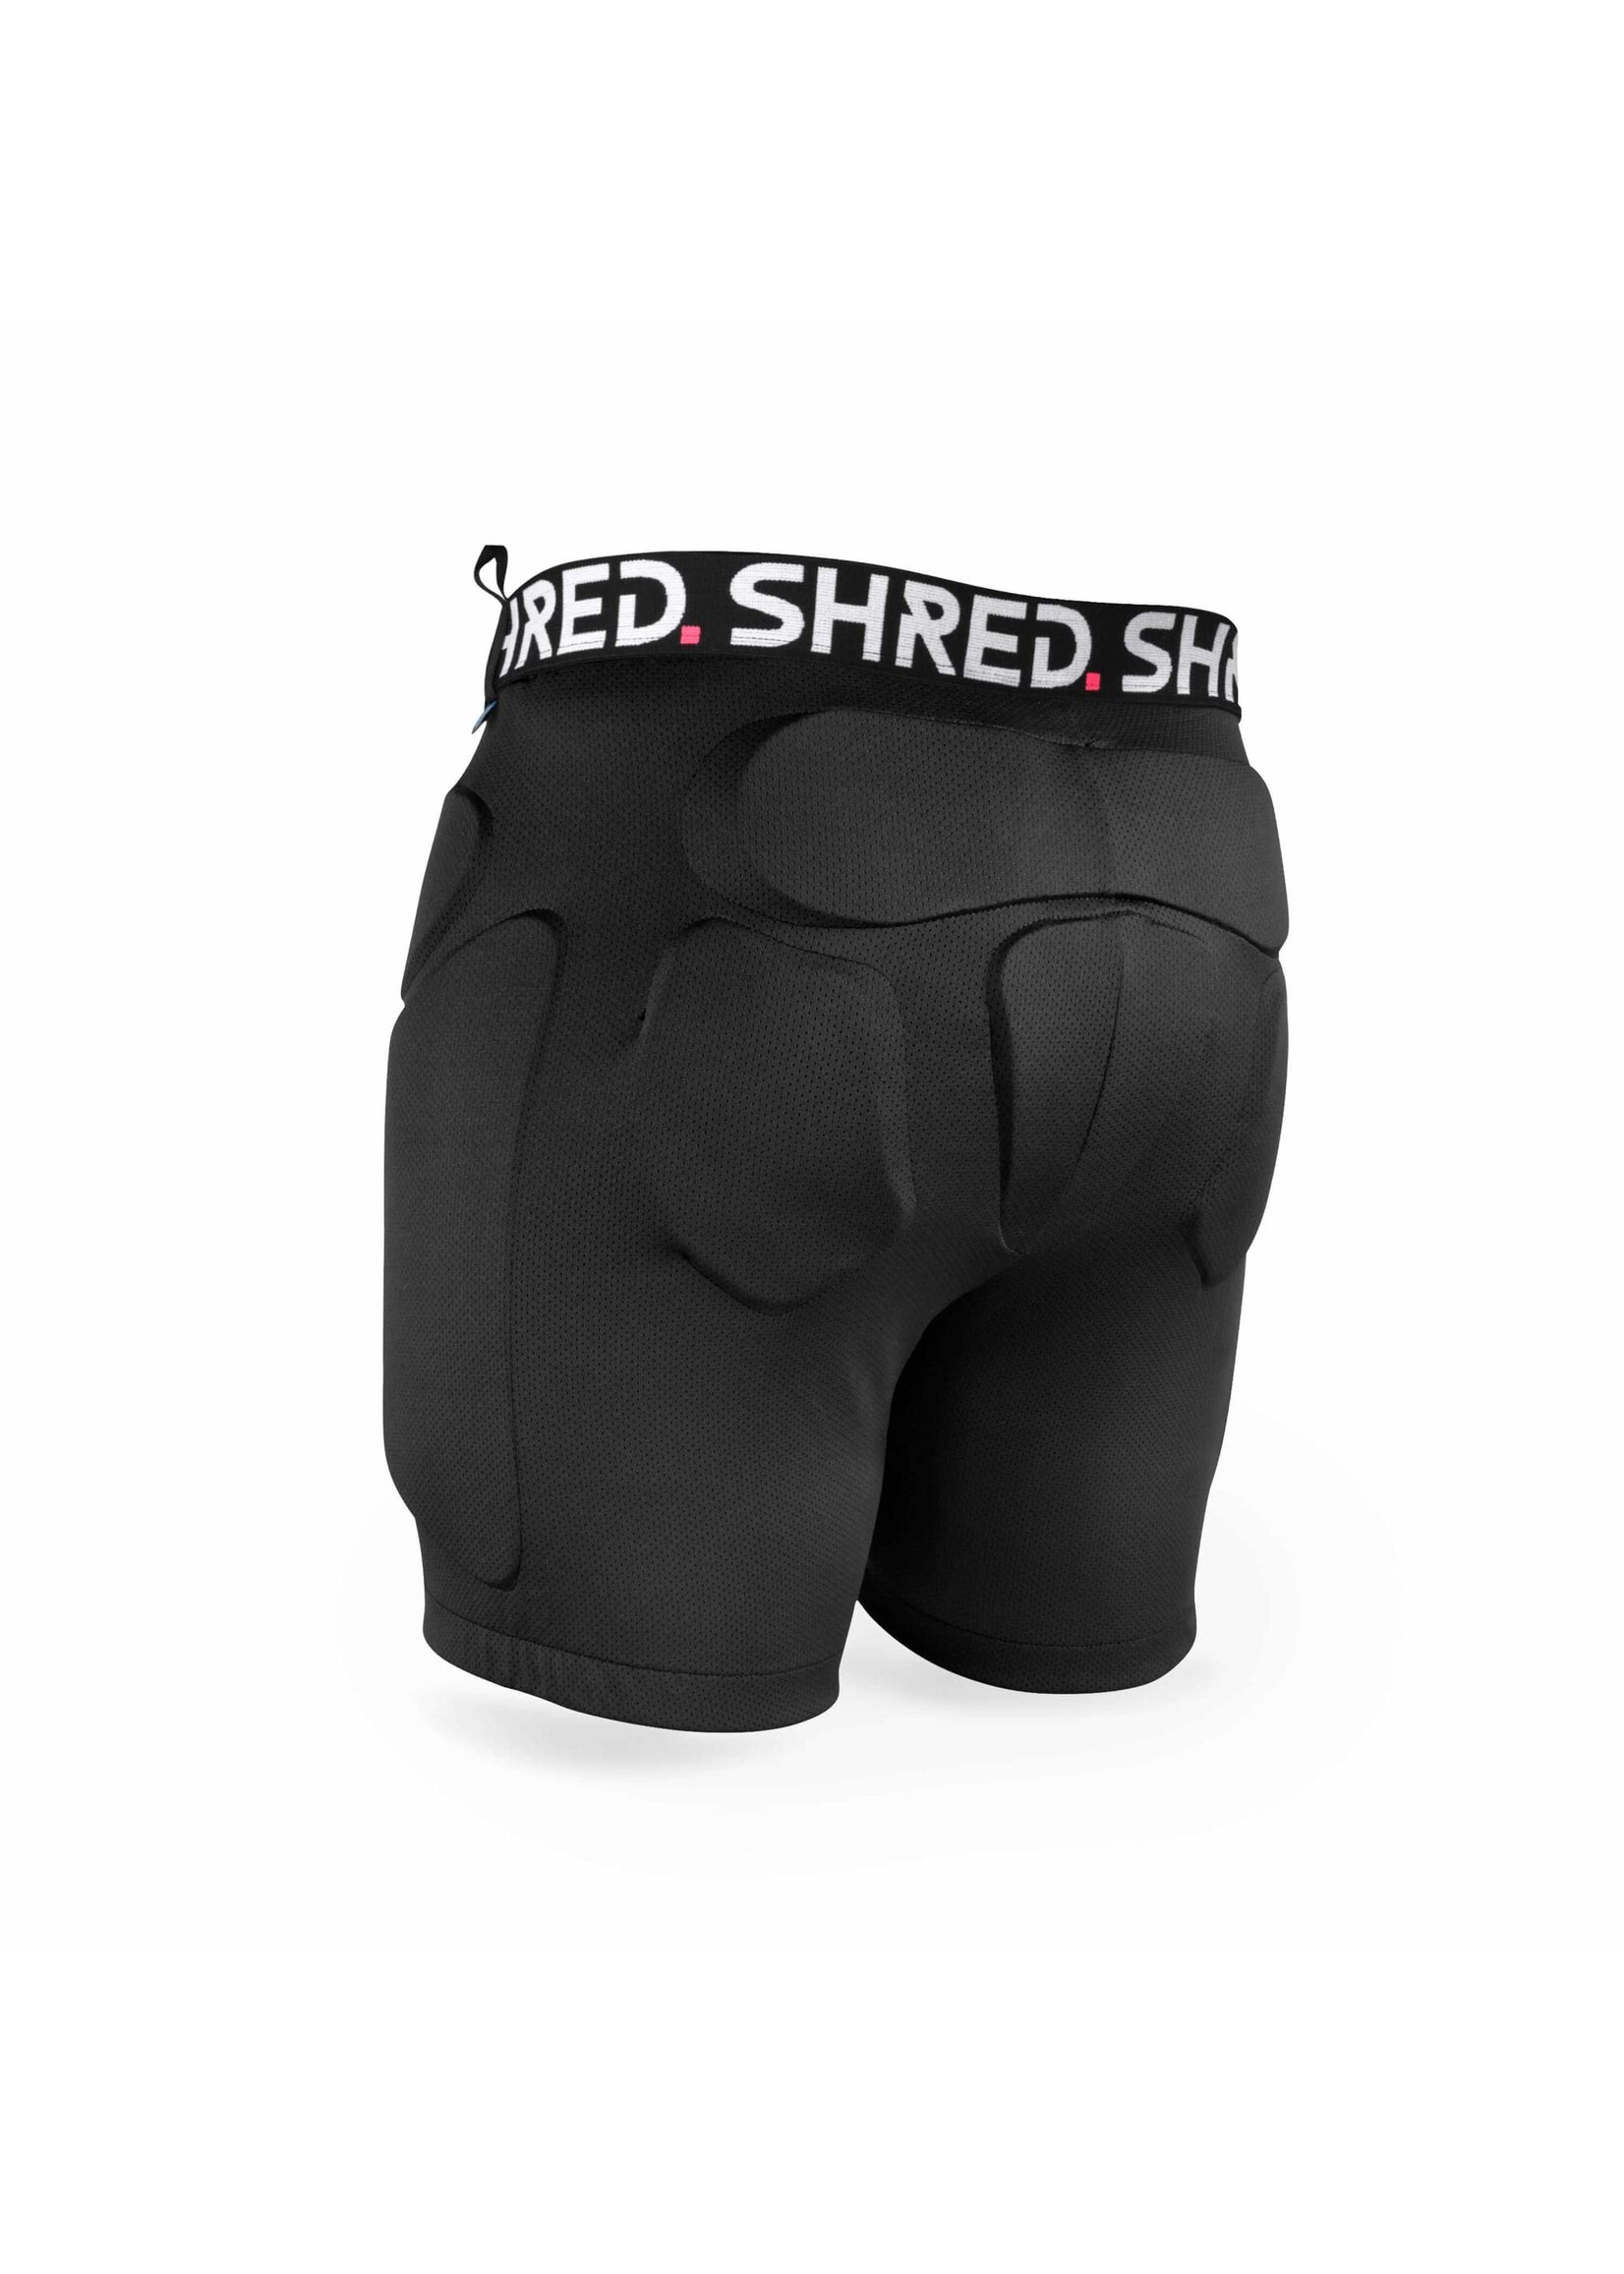 Shred Shred Protective Shorts